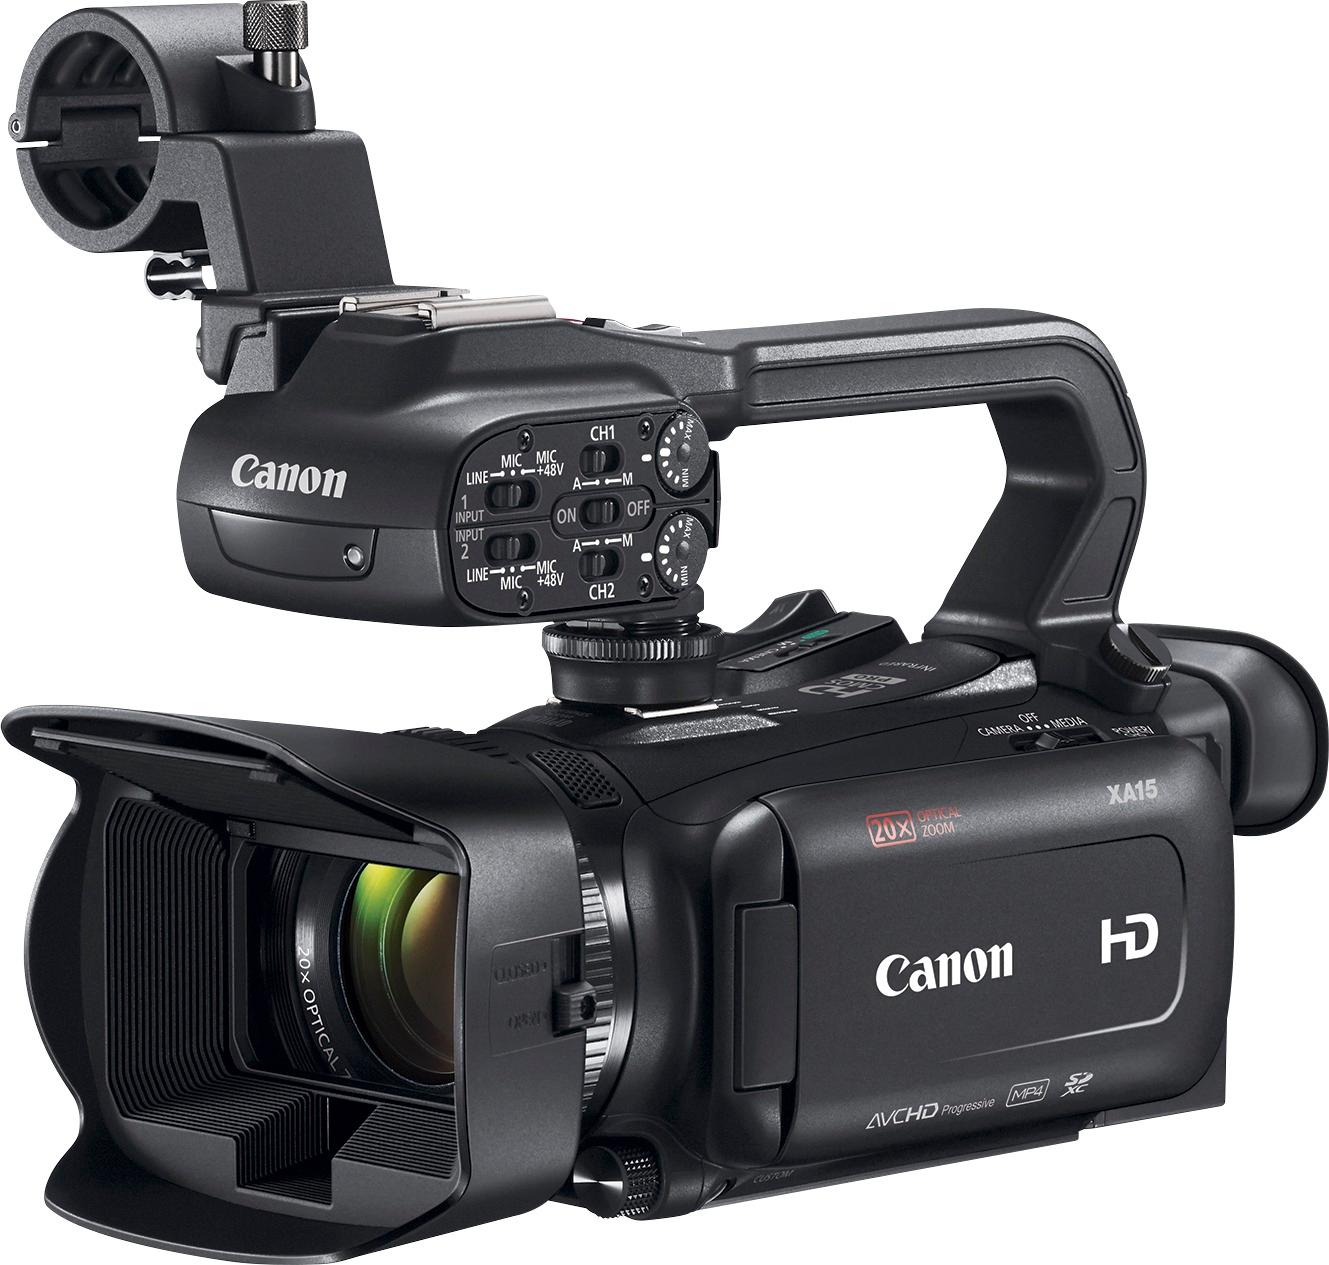 Angle View: Canon - XA15 HD Flash Memory Premium Camcorder - Black